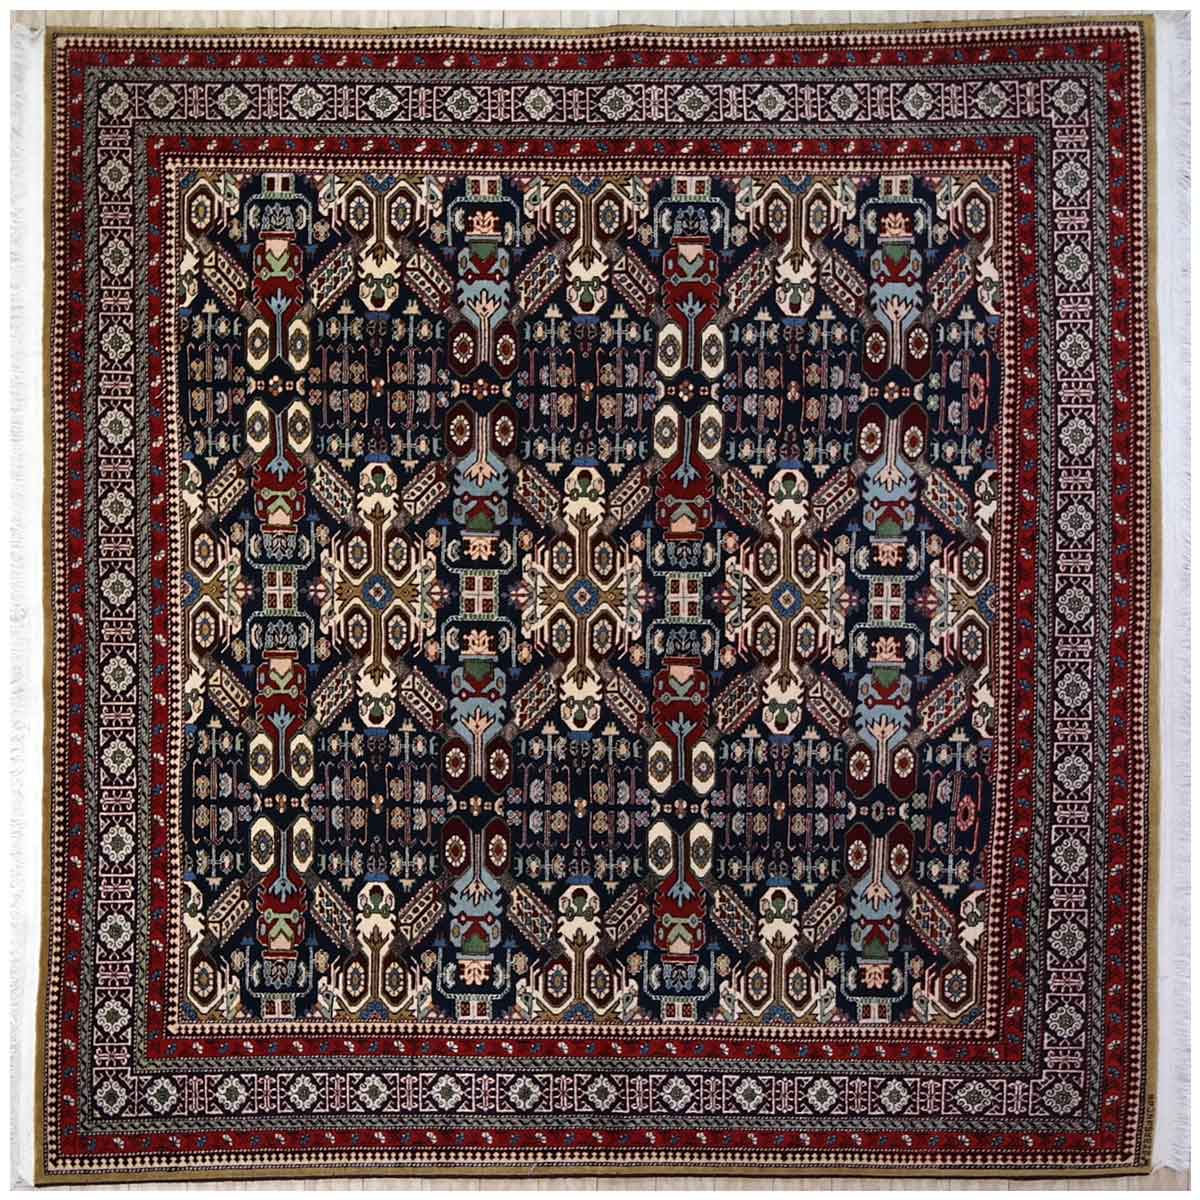 Azerbaijan Shirvan carpet